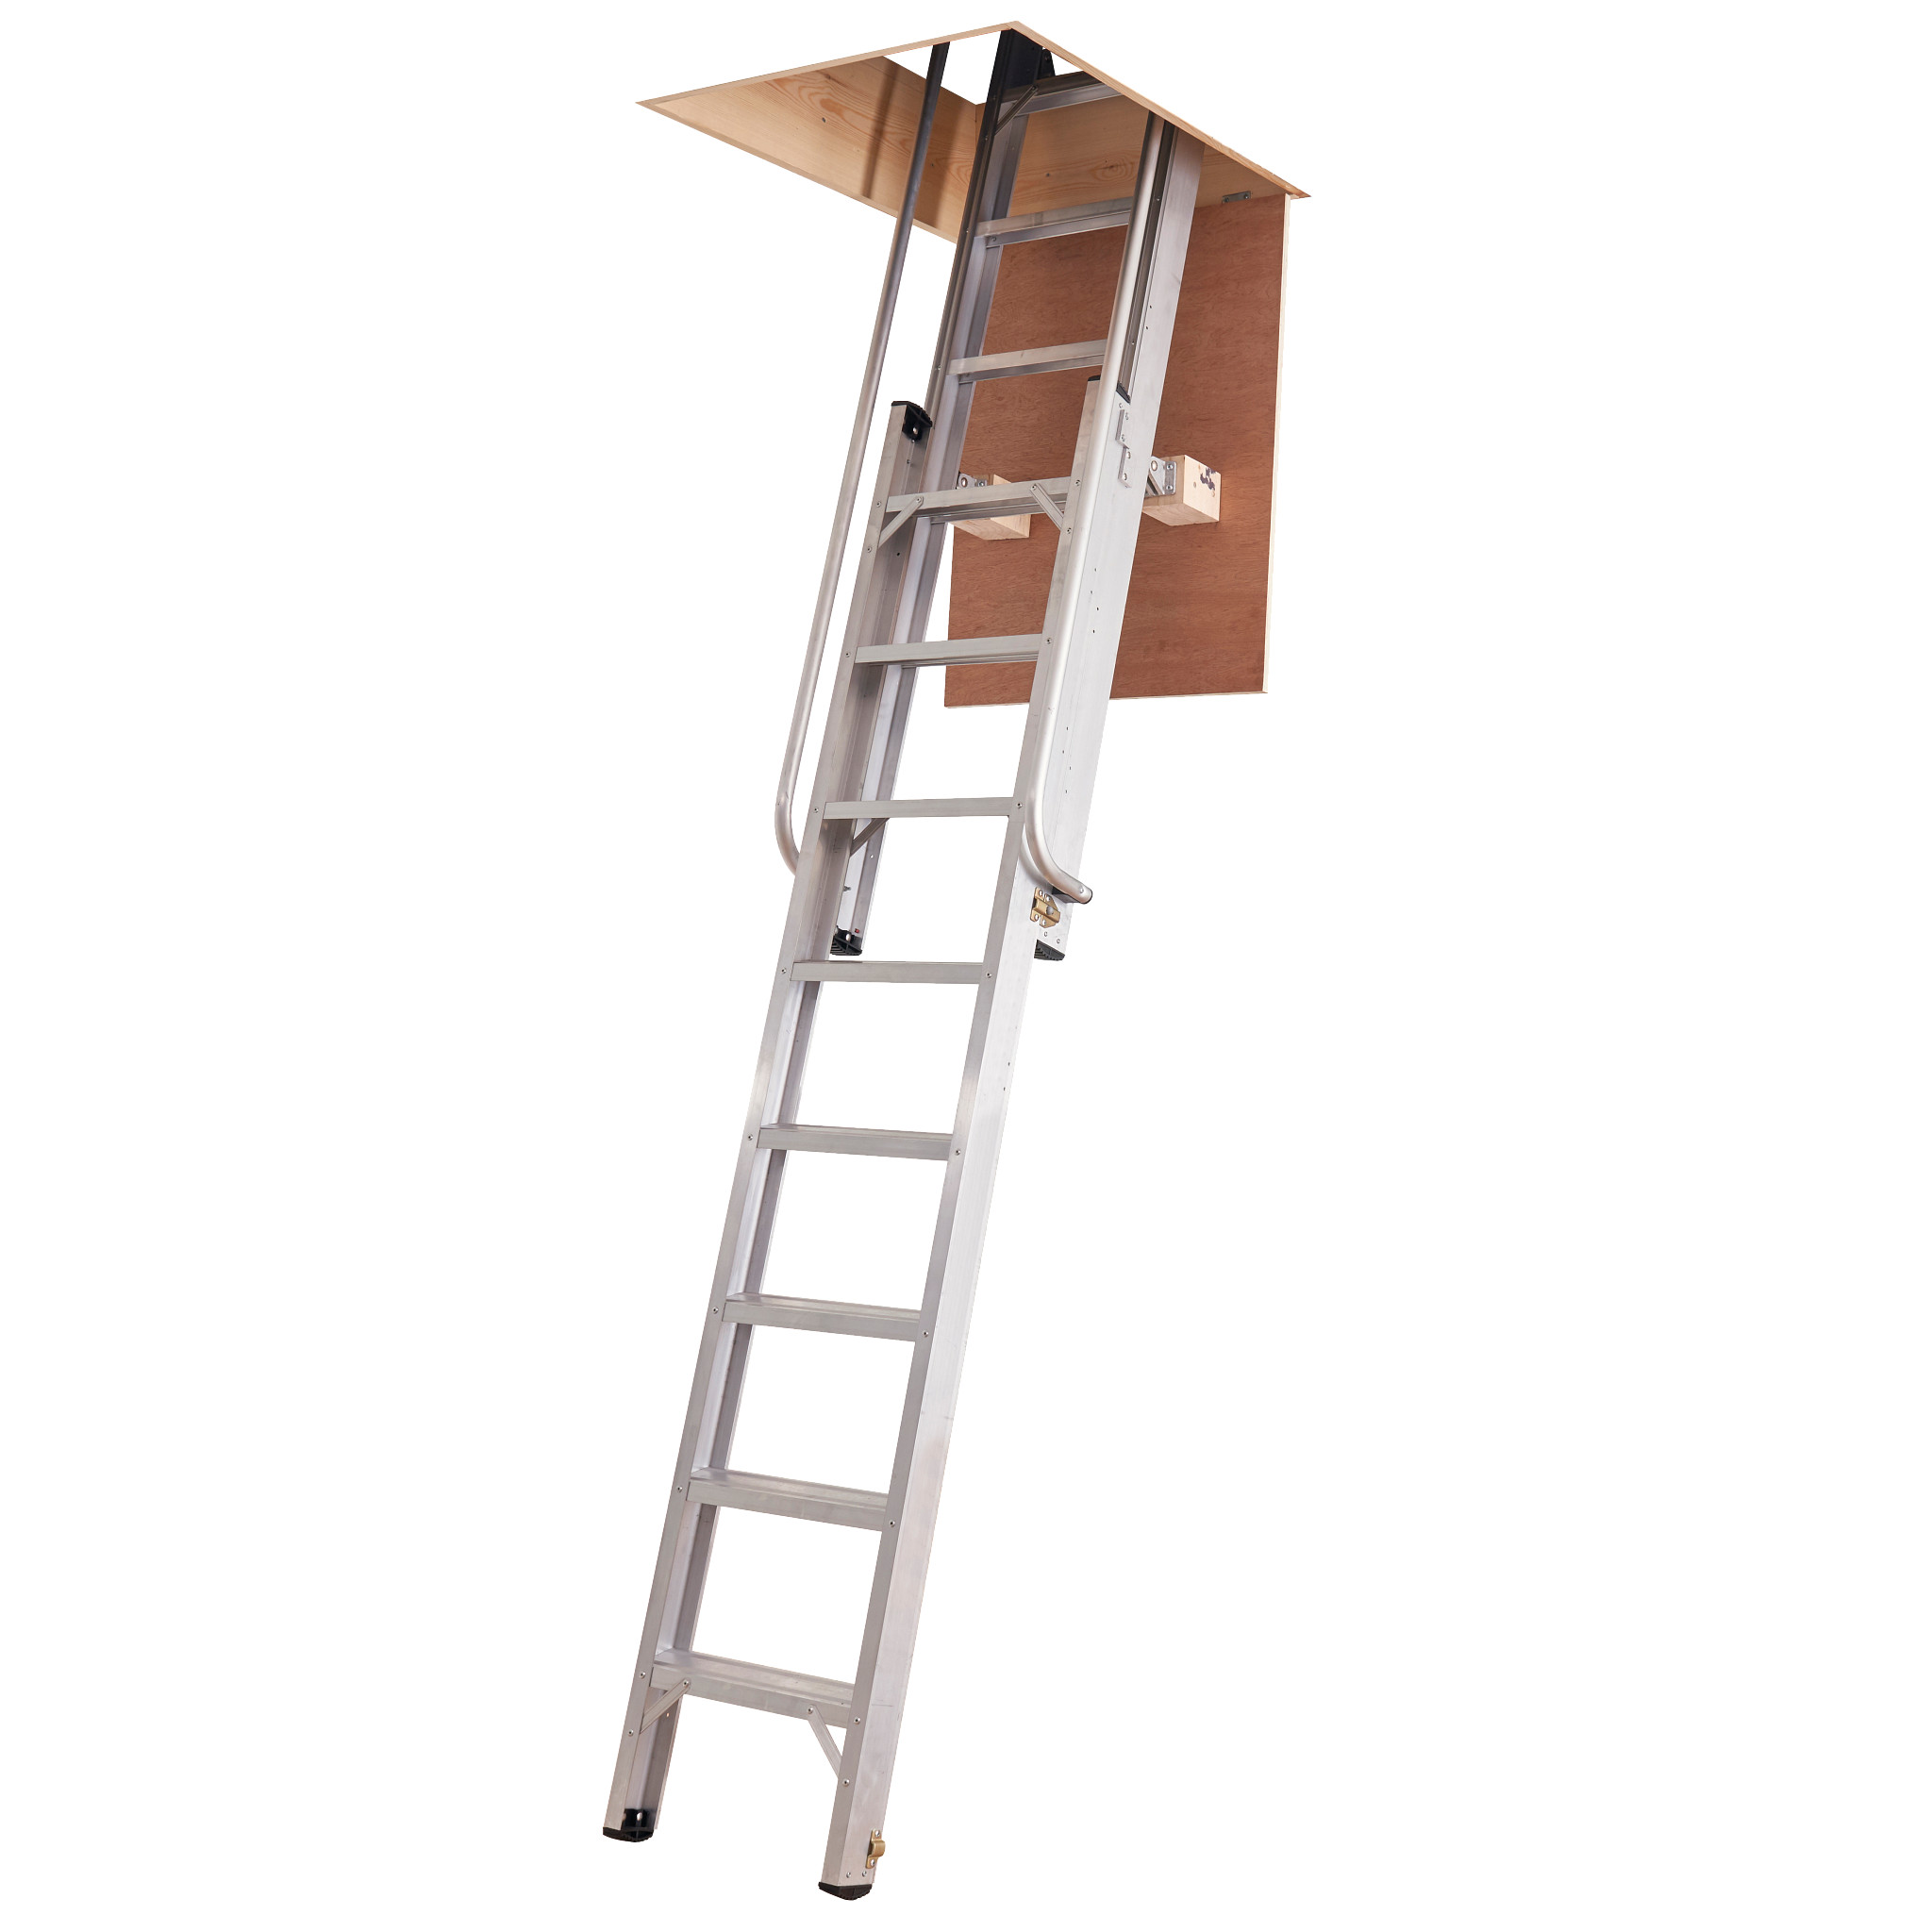 YOUNGMAN SPACEMAKER 2 Section Aluminium Sliding Loft Ladder 302340 NEW 